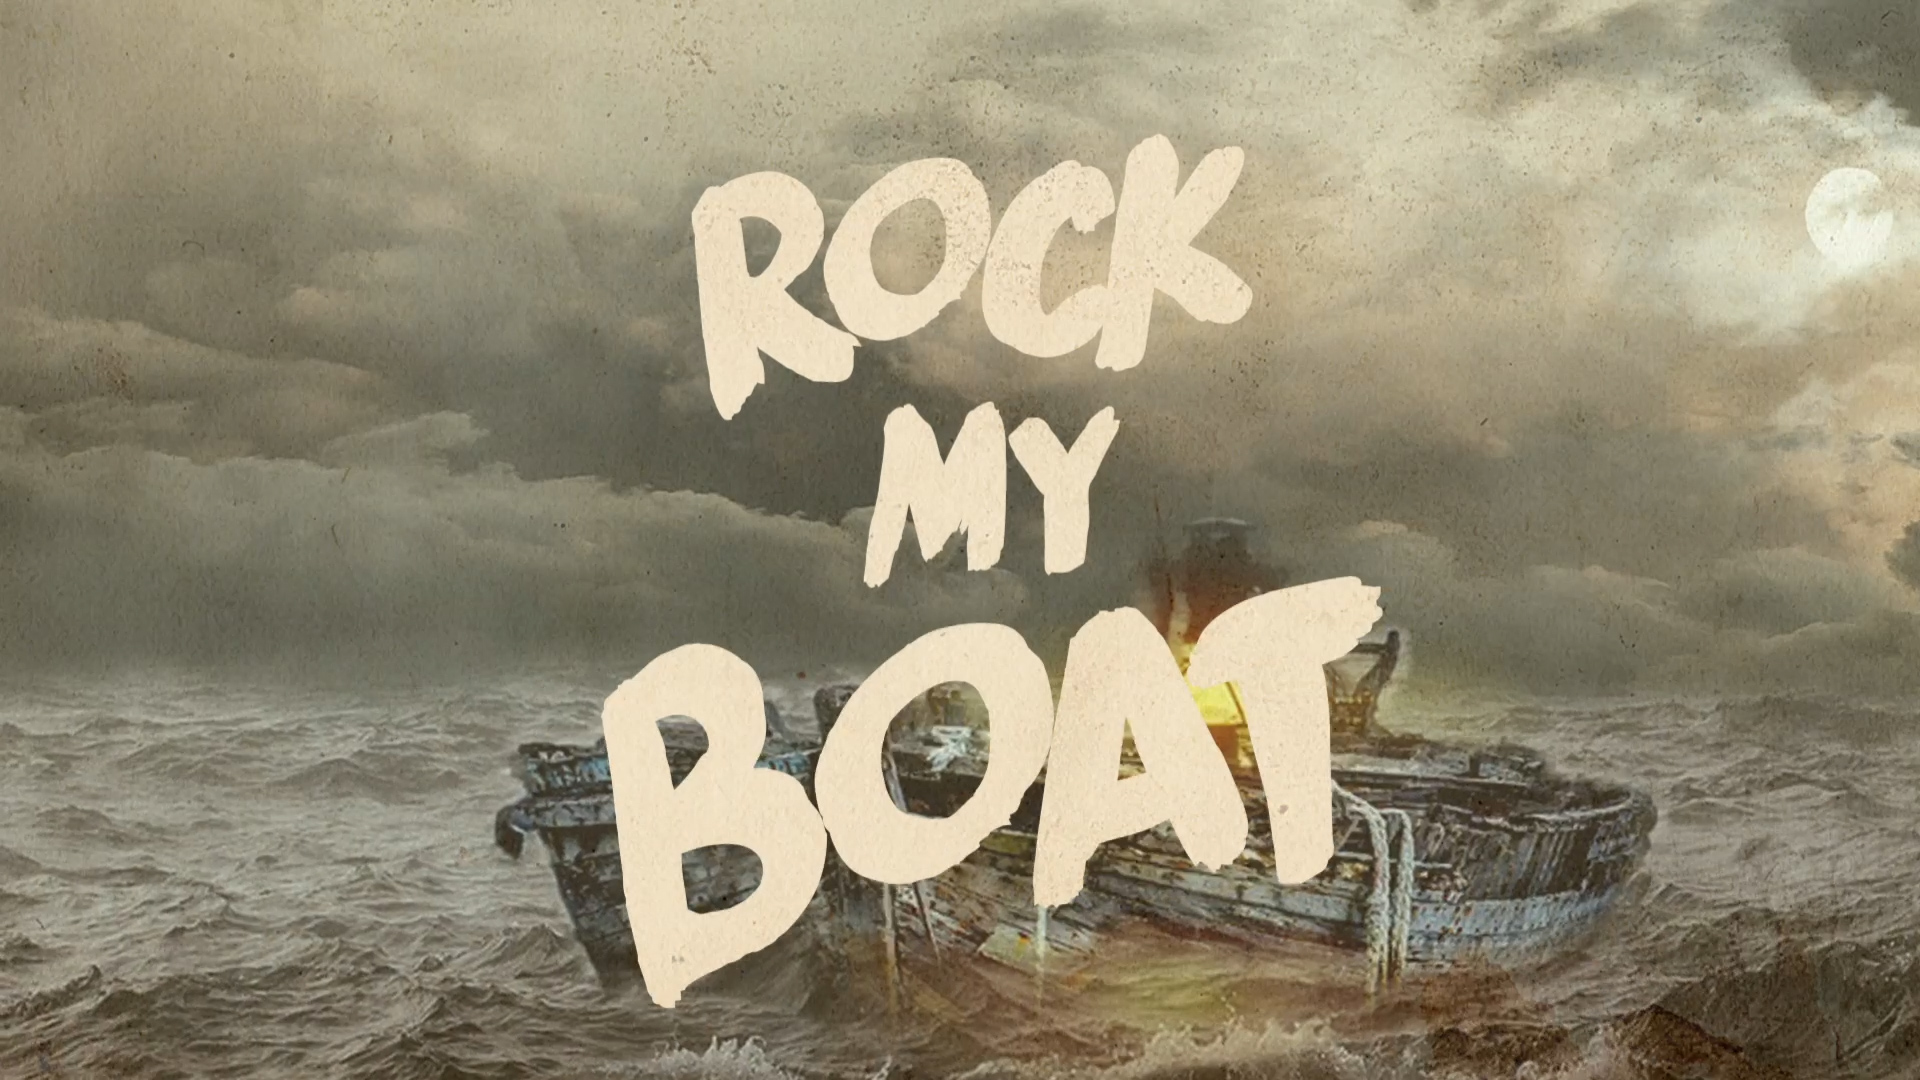 Bobby Hustle – “Rock My Boat” (Lyric Video)